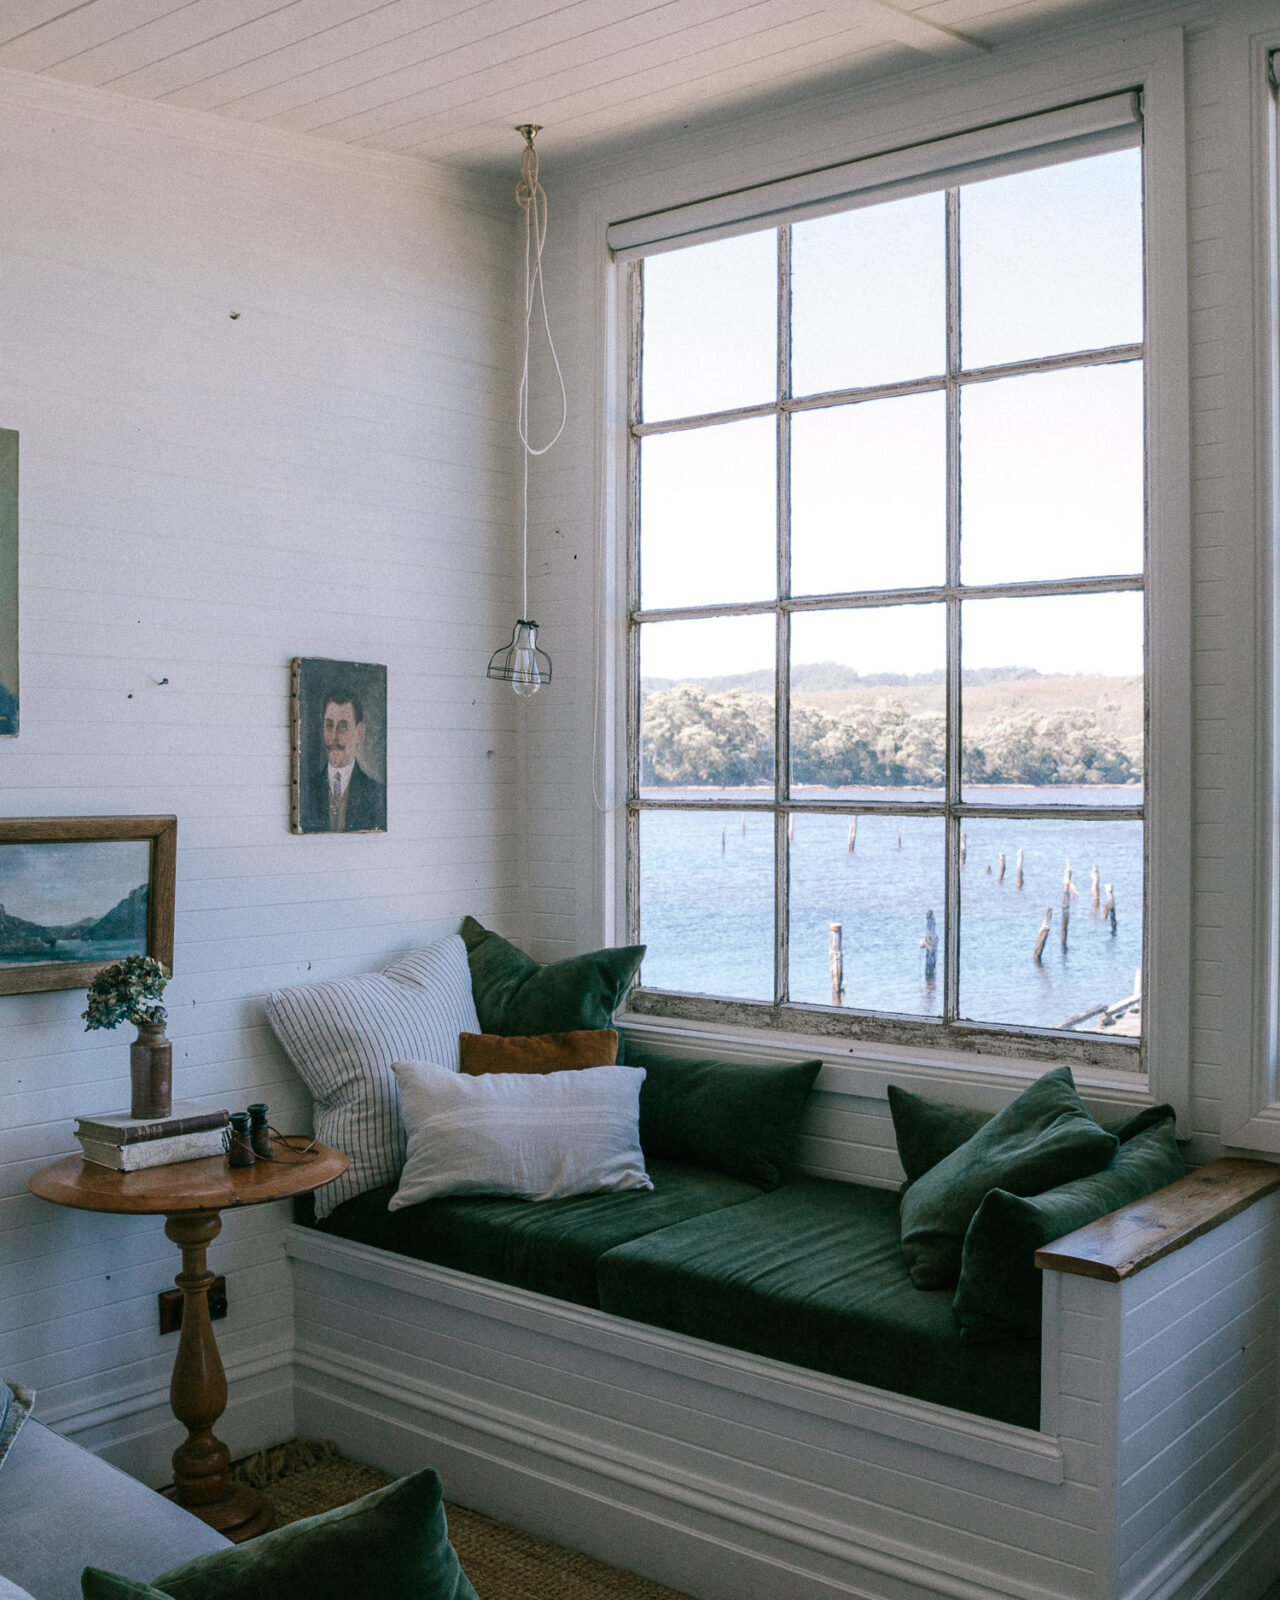 Weekday Wanderlust | Places: Captain's Rest, Lettes Bay Historical Village, Strahan, Tasmania